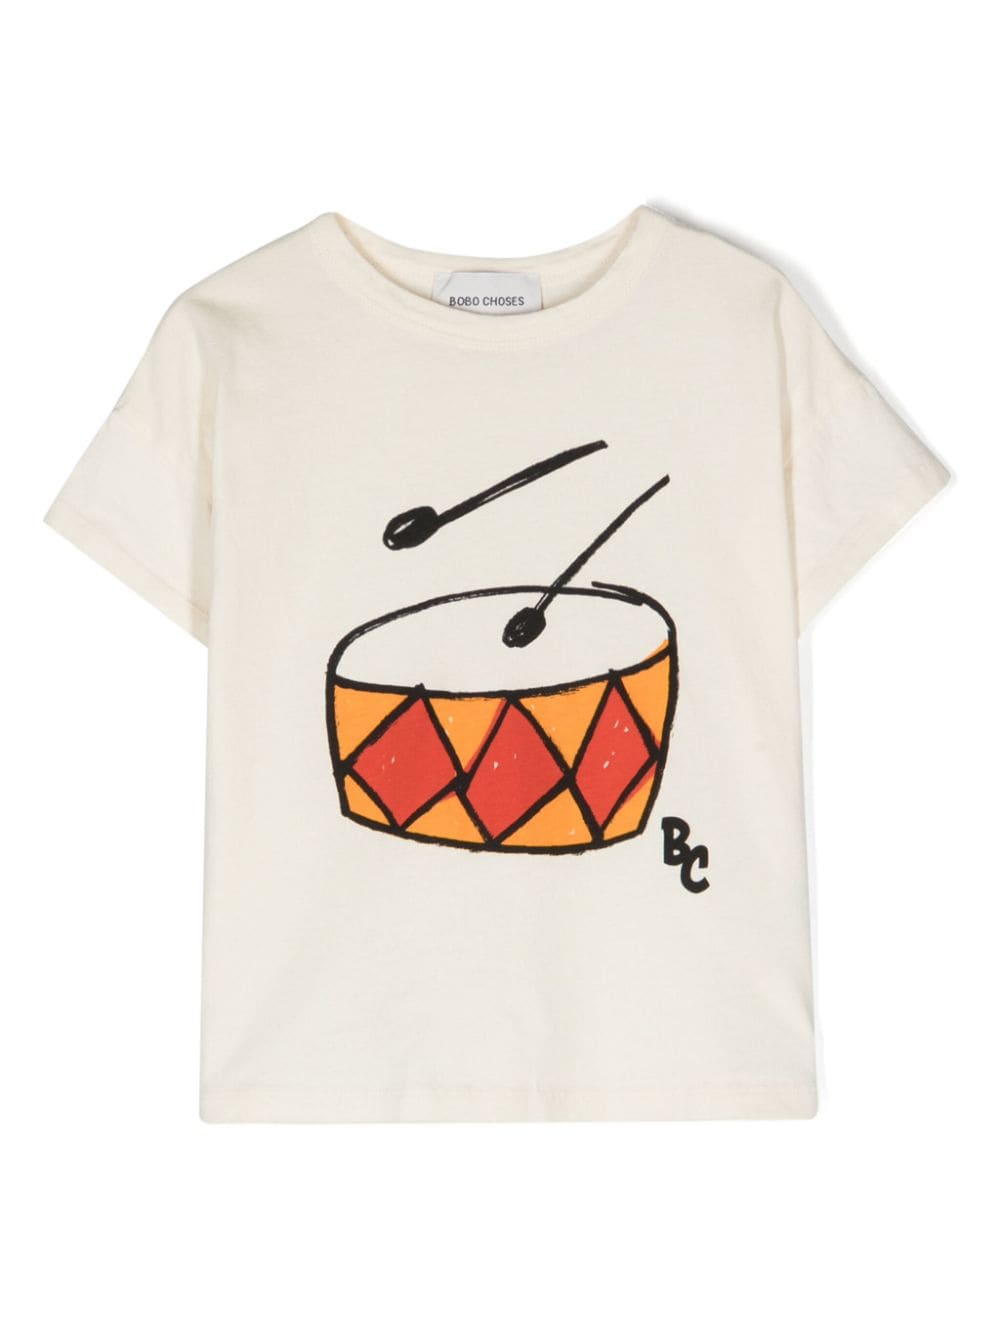 Bobo Choses Play The Drum cotton T-shirt - Neutrals von Bobo Choses